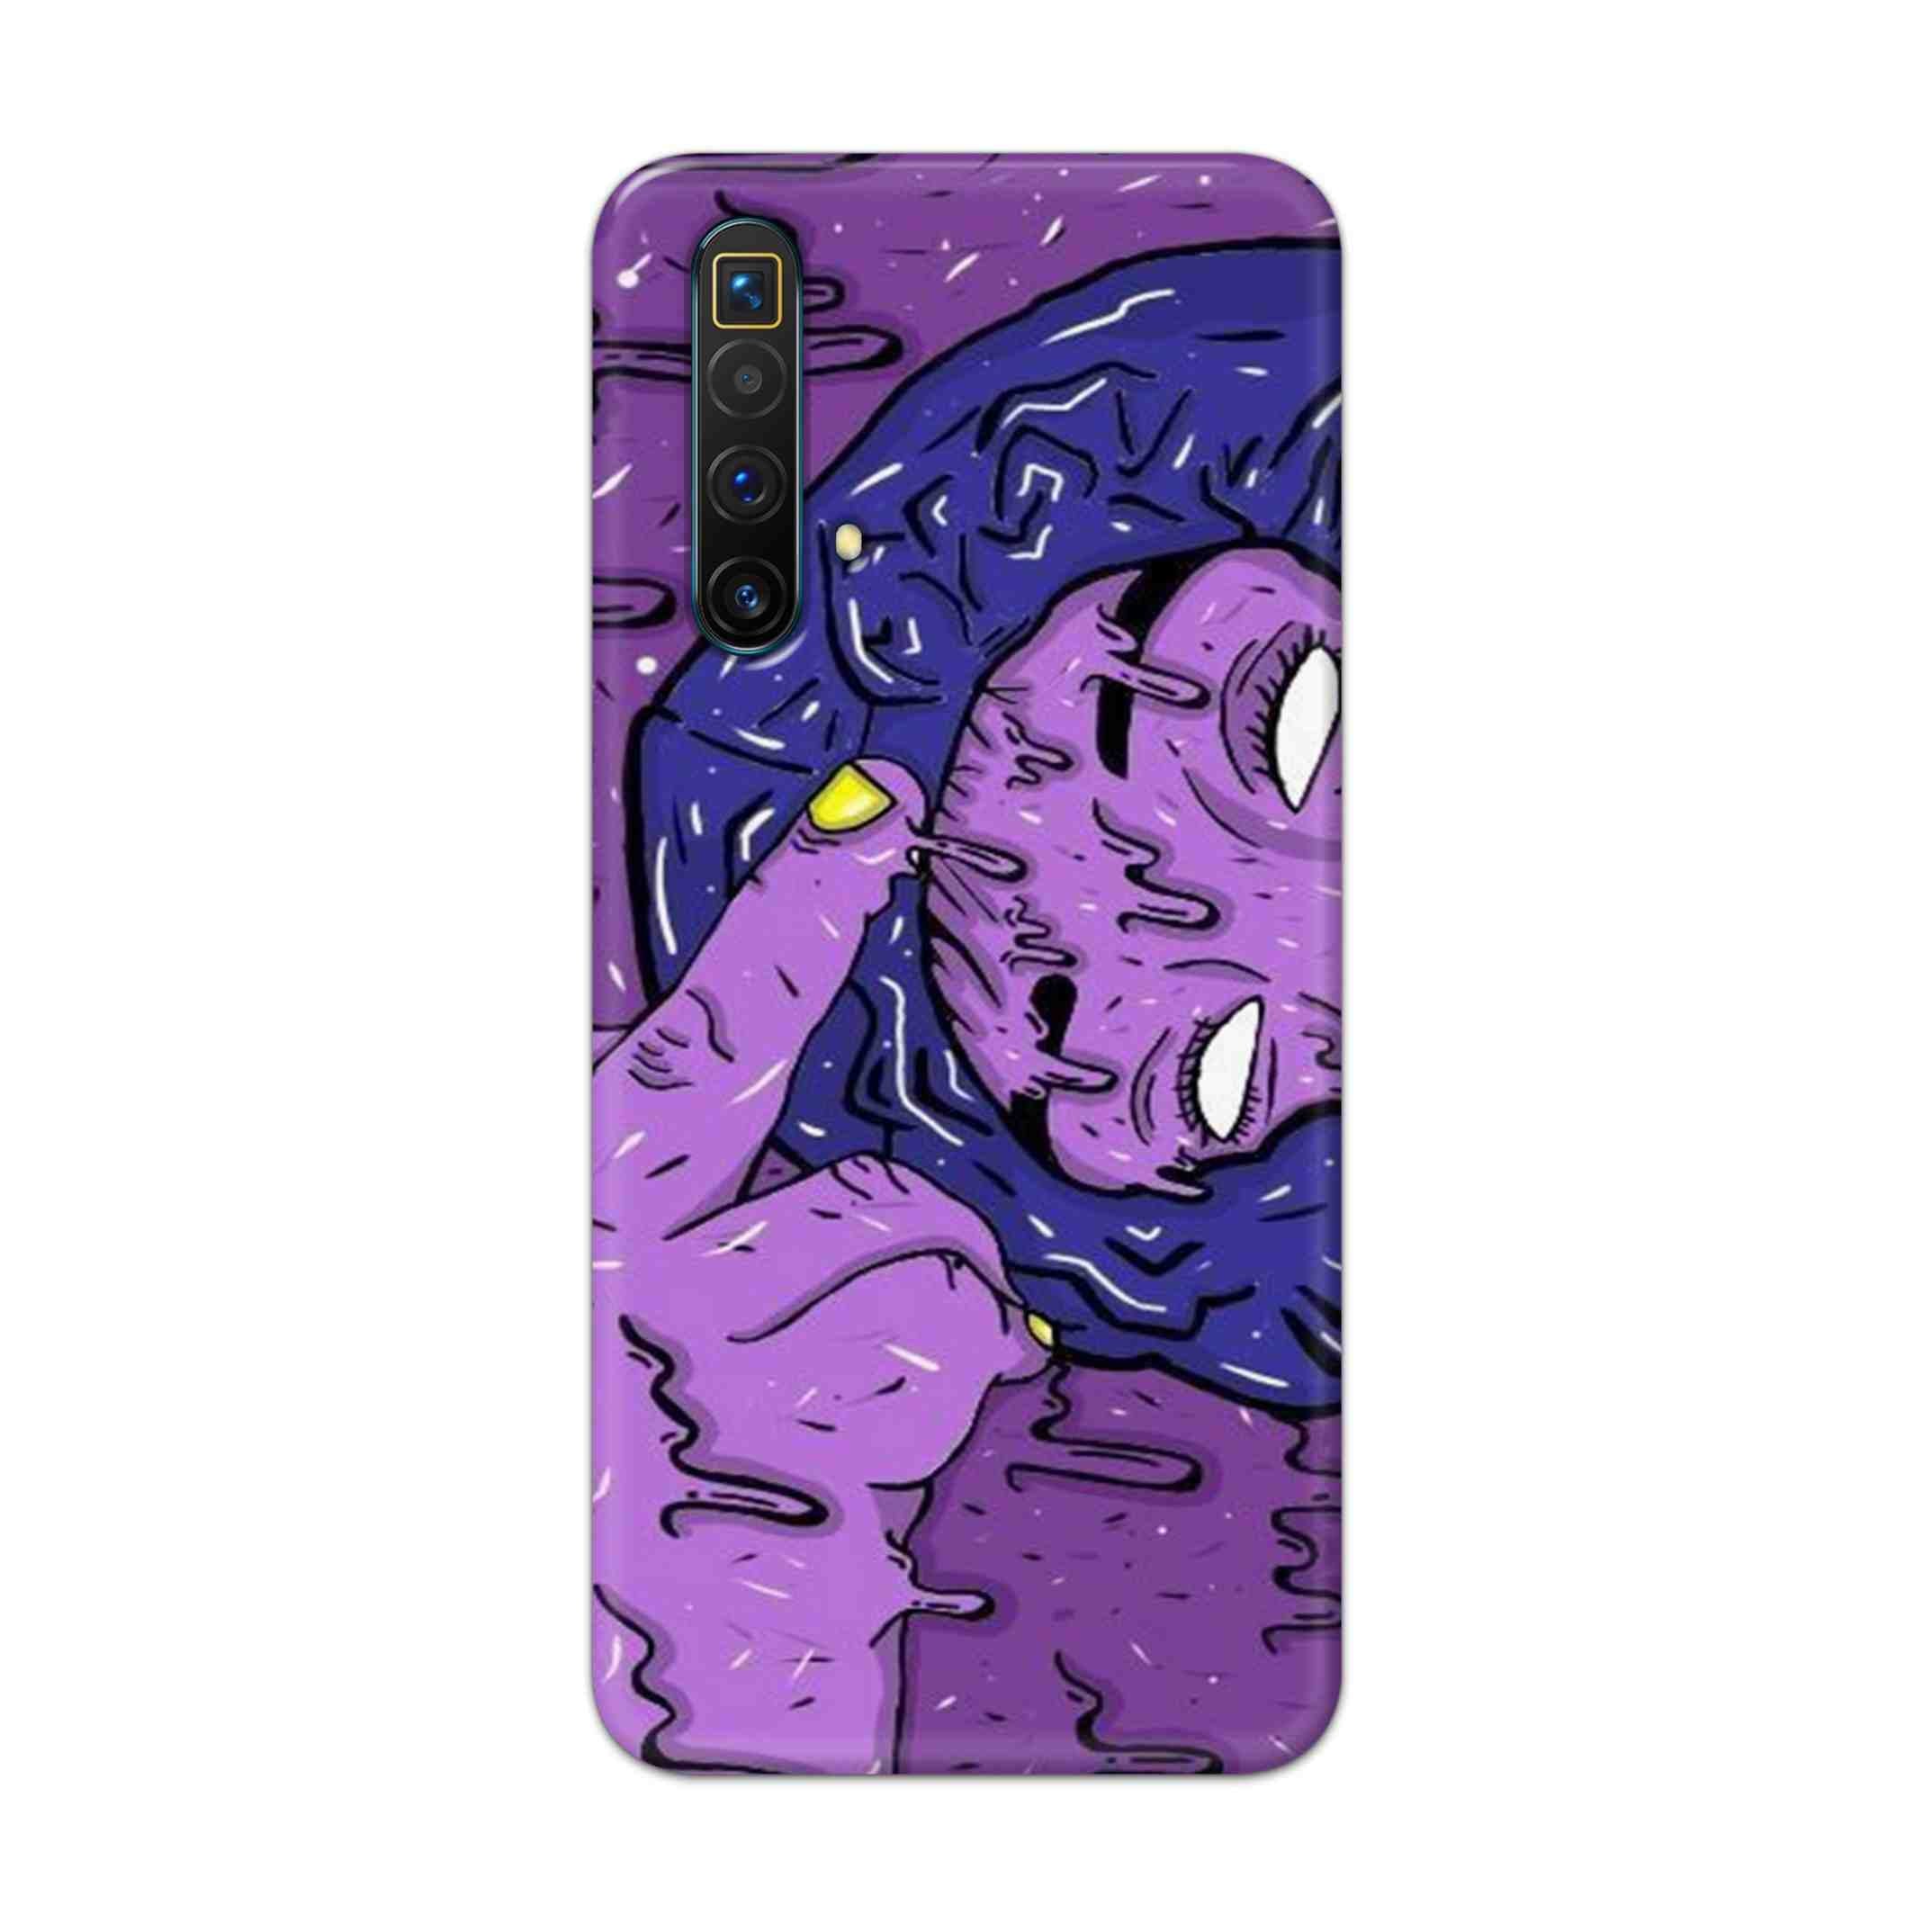 Buy Dashing Art Hard Back Mobile Phone Case Cover For Realme X3 Superzoom Online